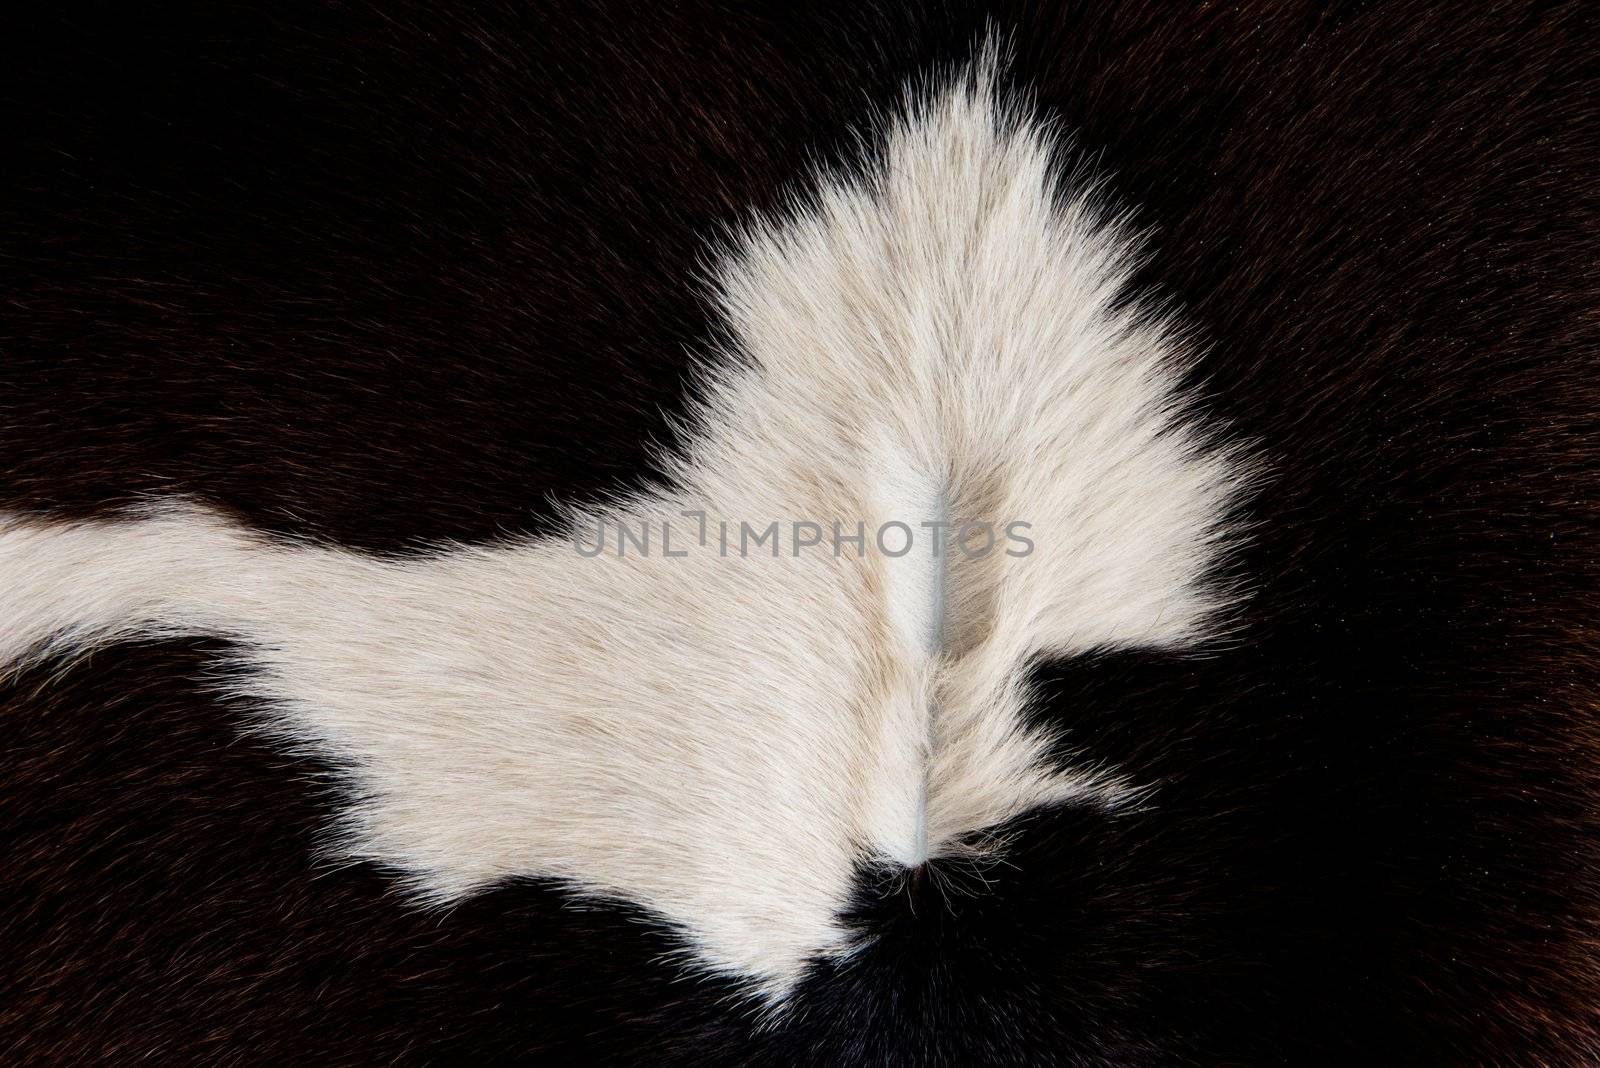 Cattle skin texture black and white pattern, taken at close range